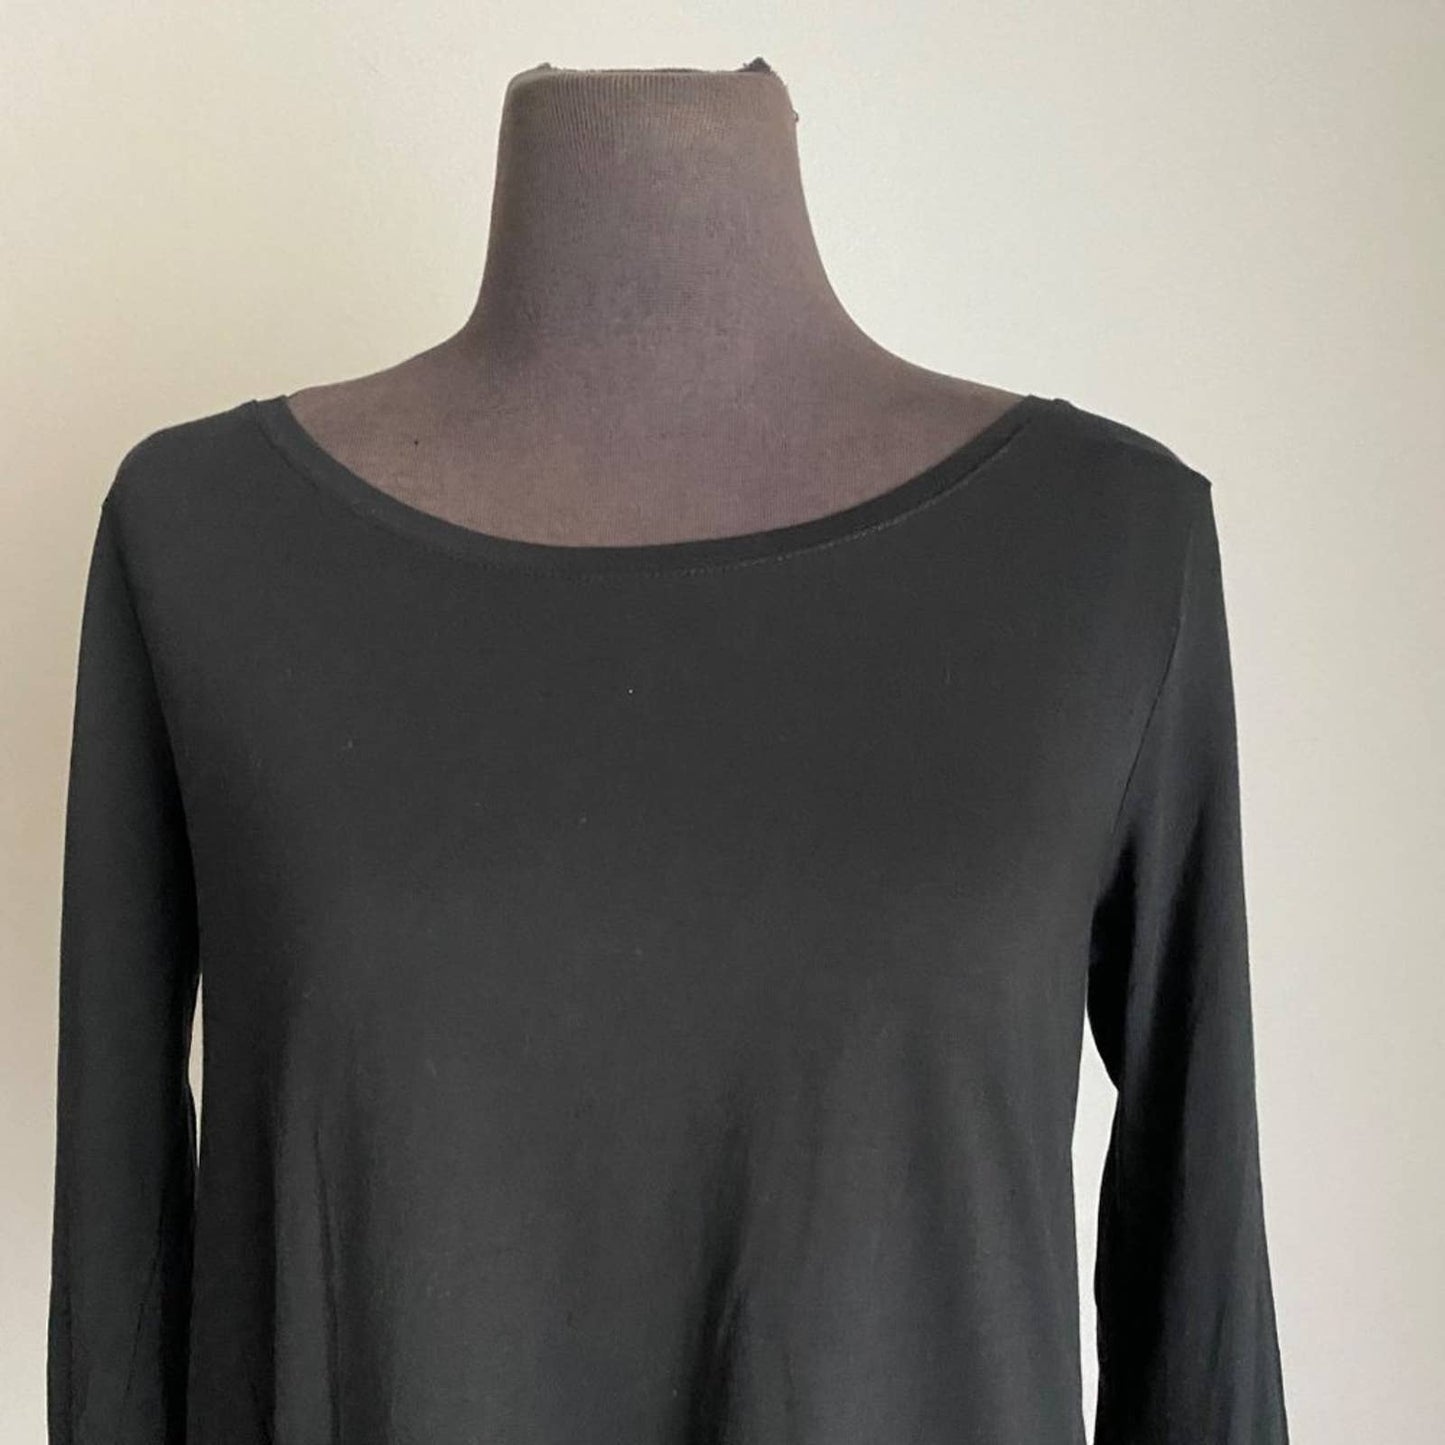 J. Jill PureJill sz XS 100% cotton long sleeve scoop neck shirt NWT